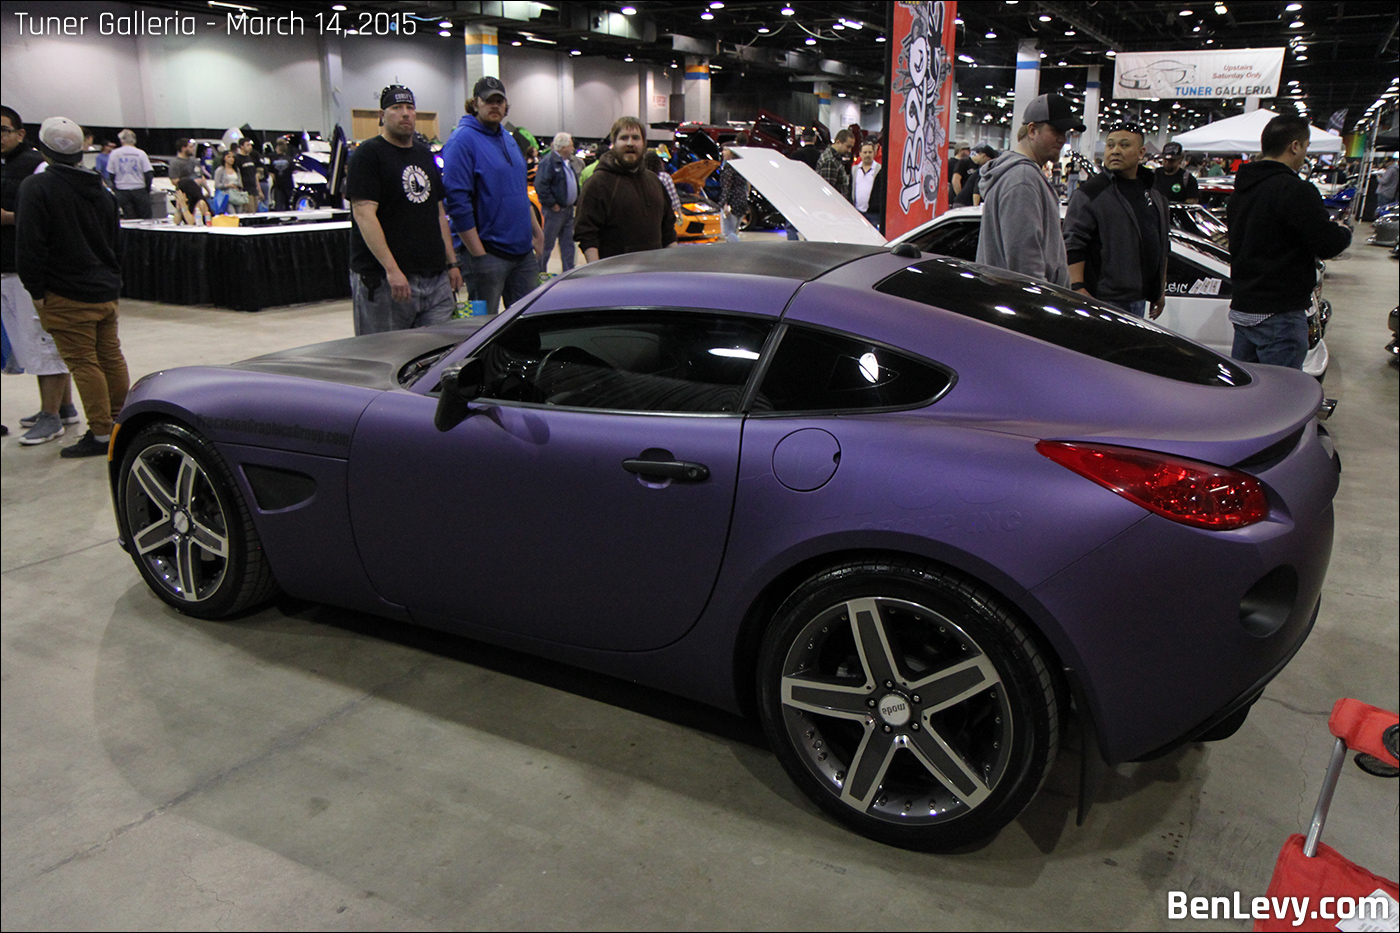 Purple Pontiac Solstice coupe